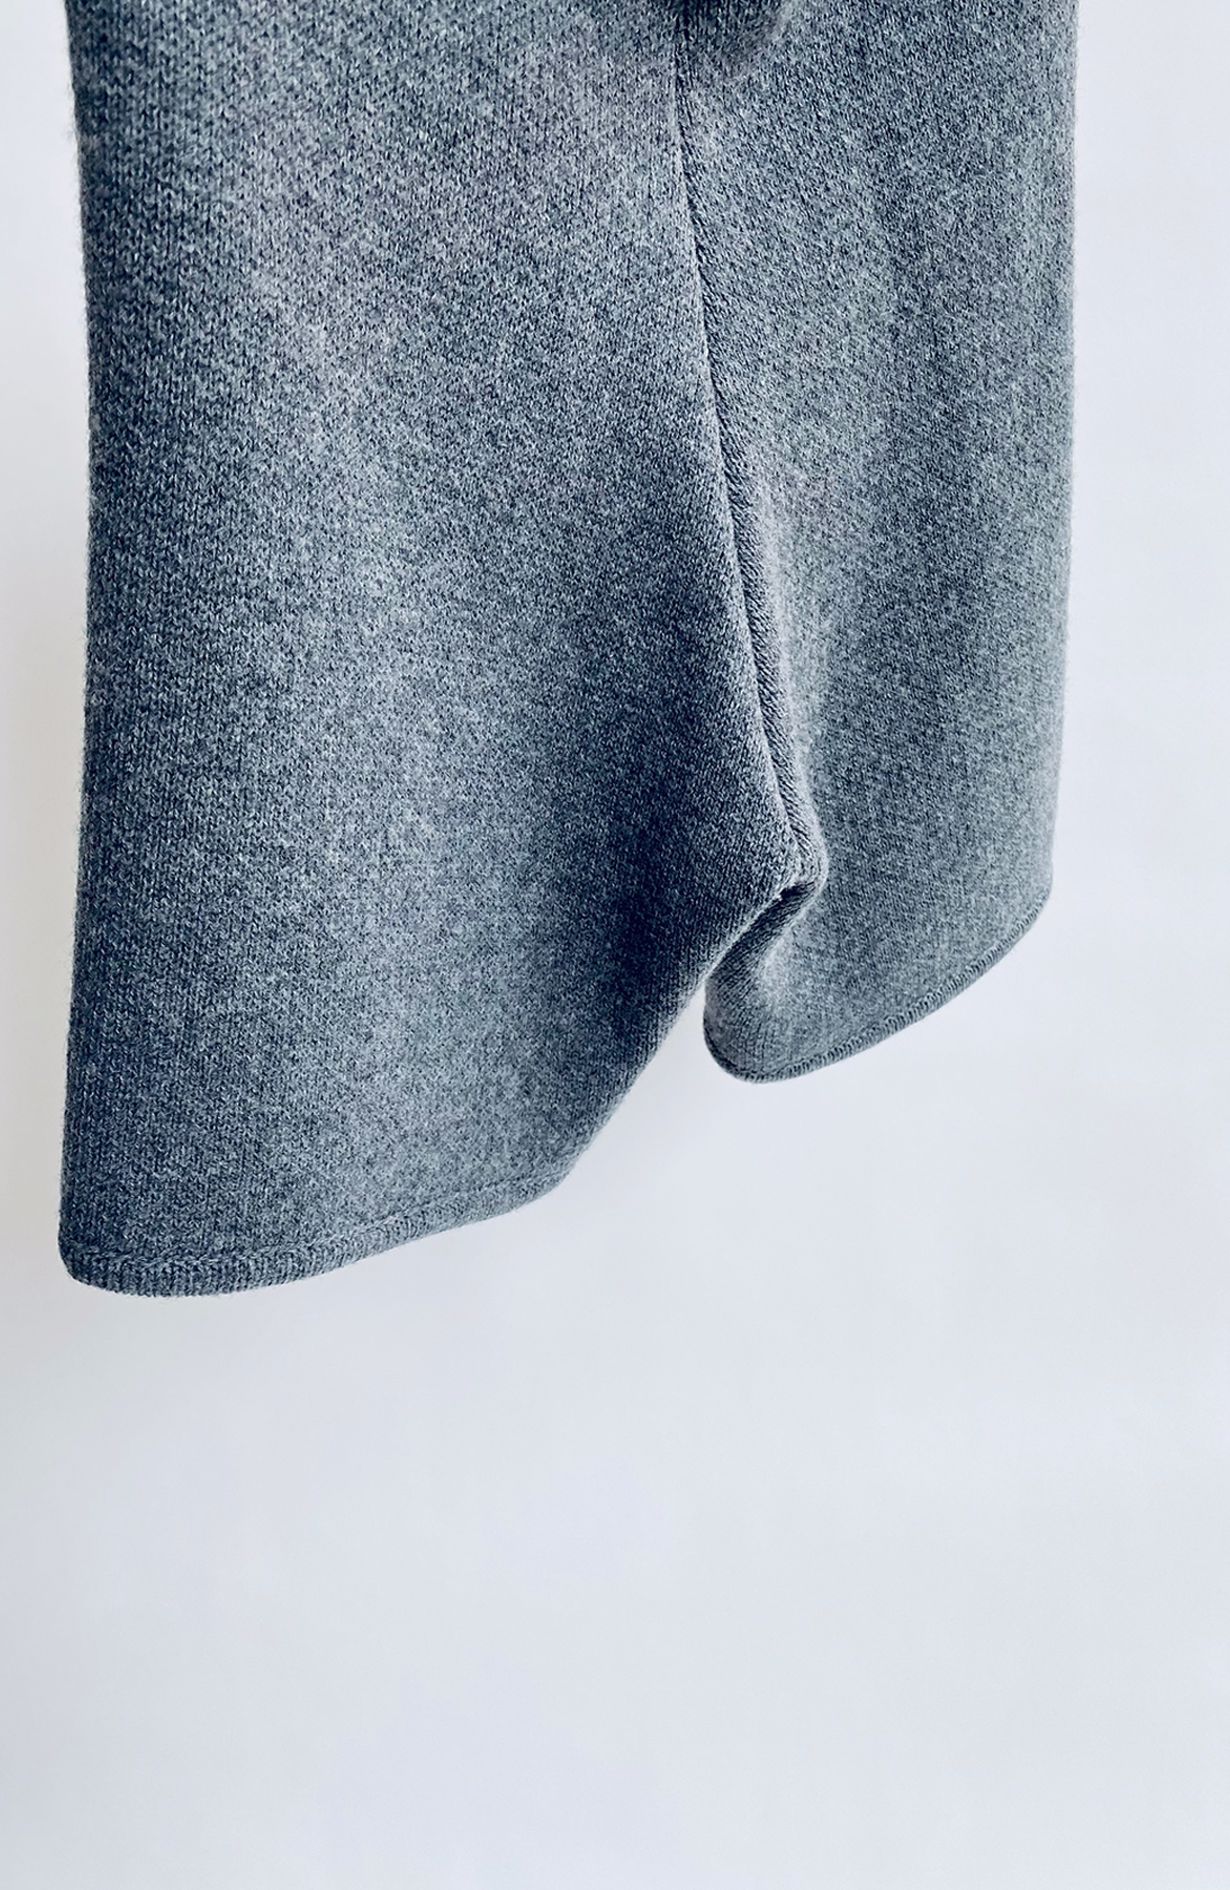 Magda Butrym knit pants size 34